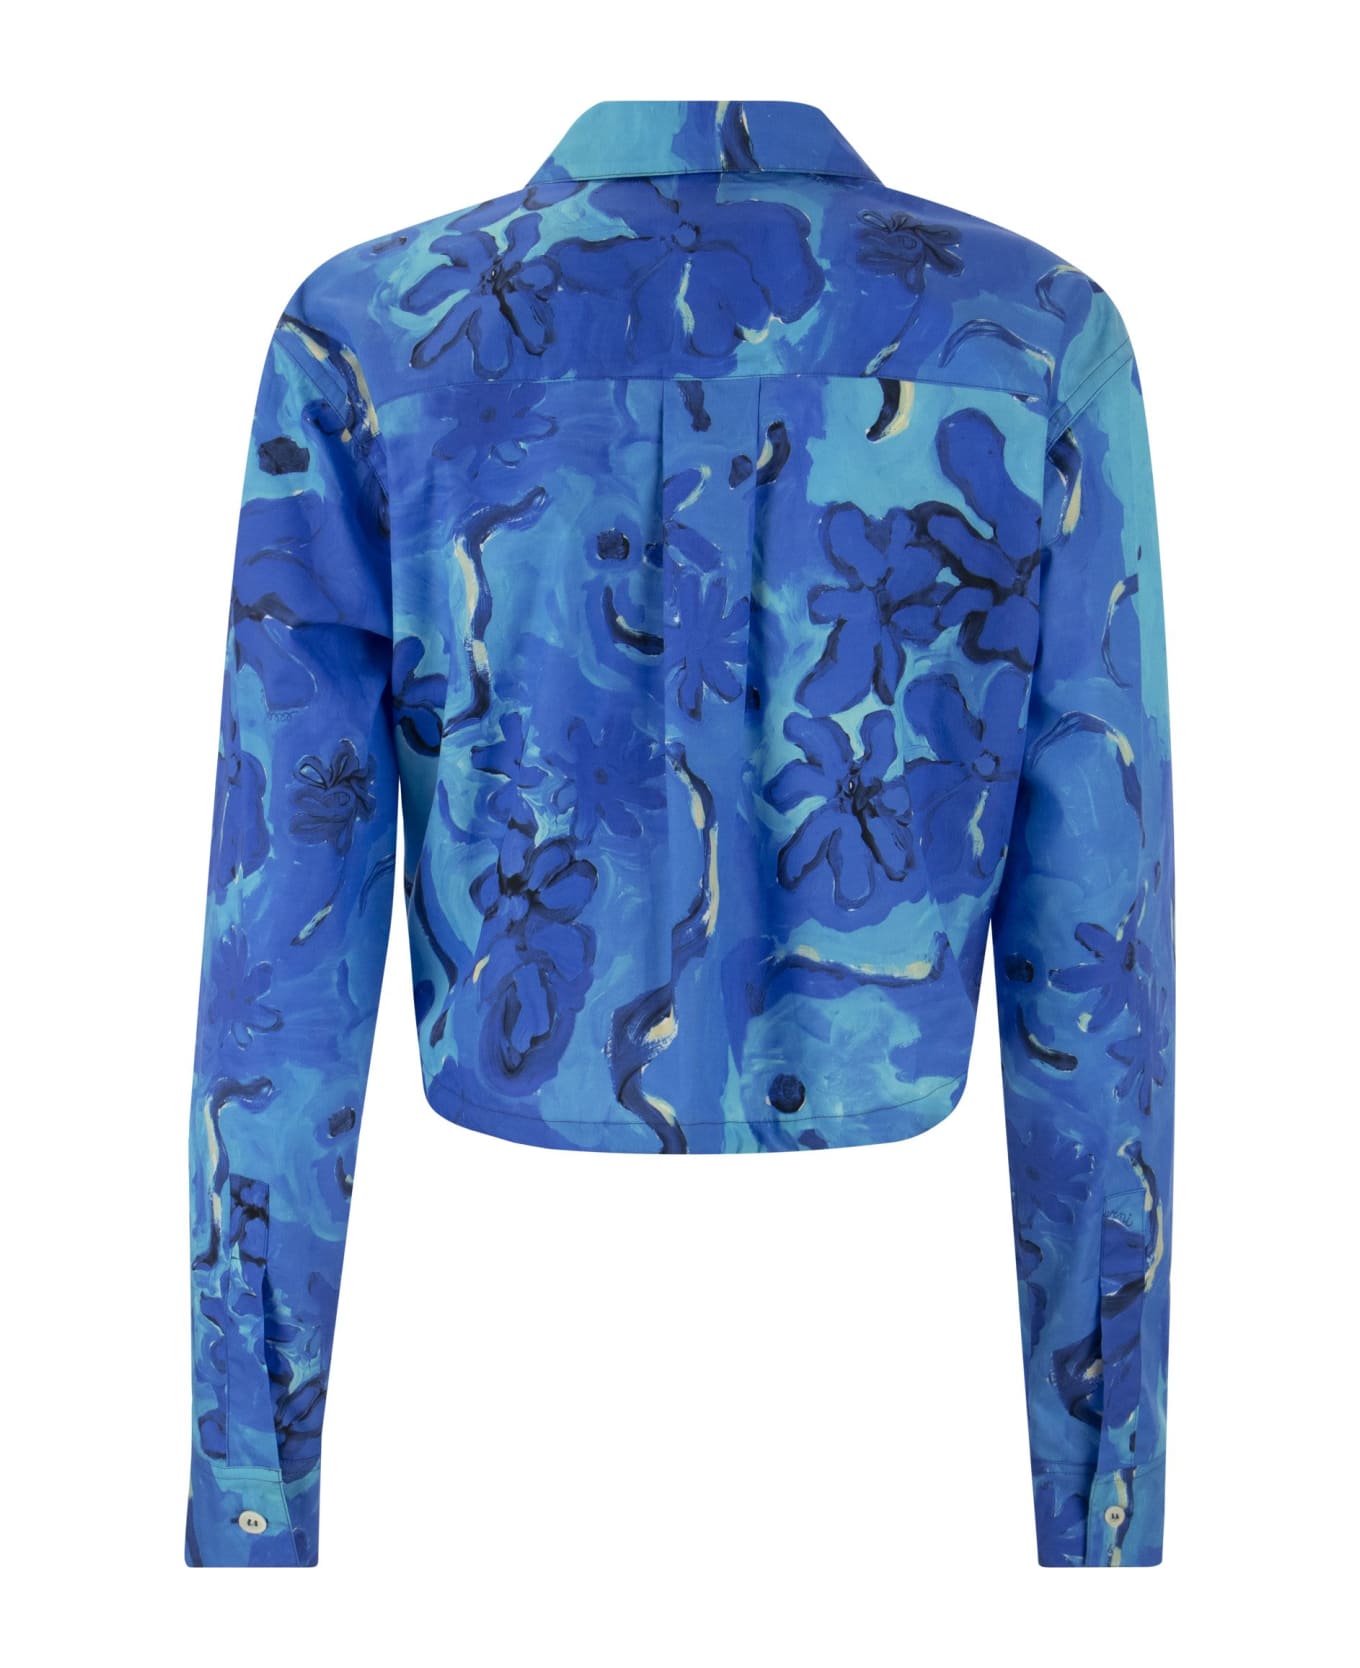 Marni Cotton Shirt With Drawstring - Cobalt Blue